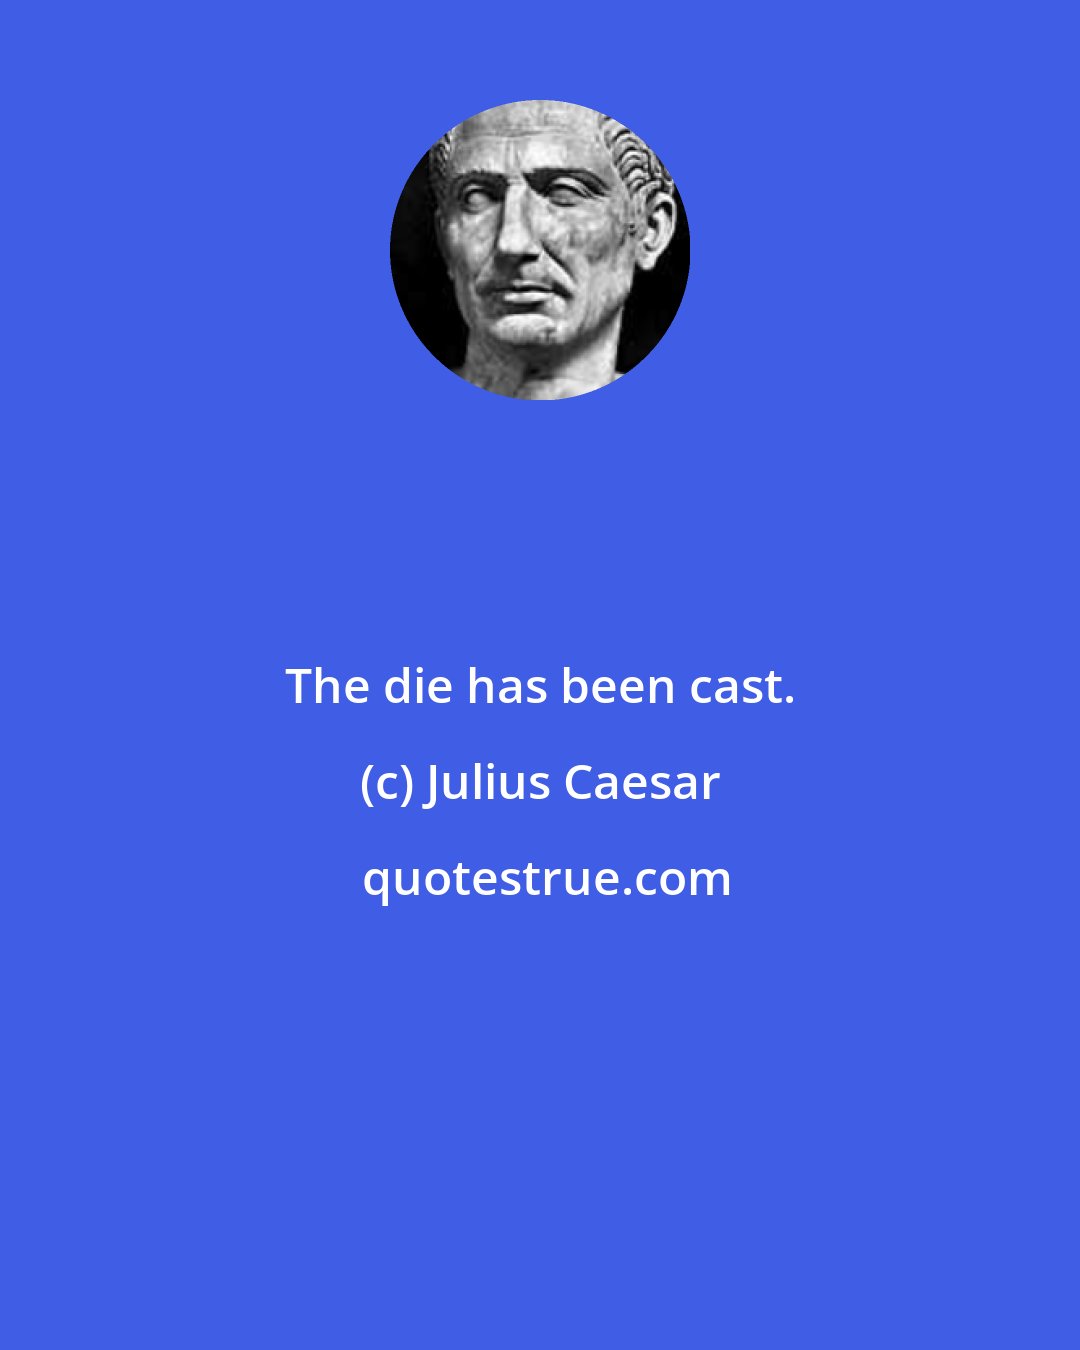 Julius Caesar: The die has been cast.